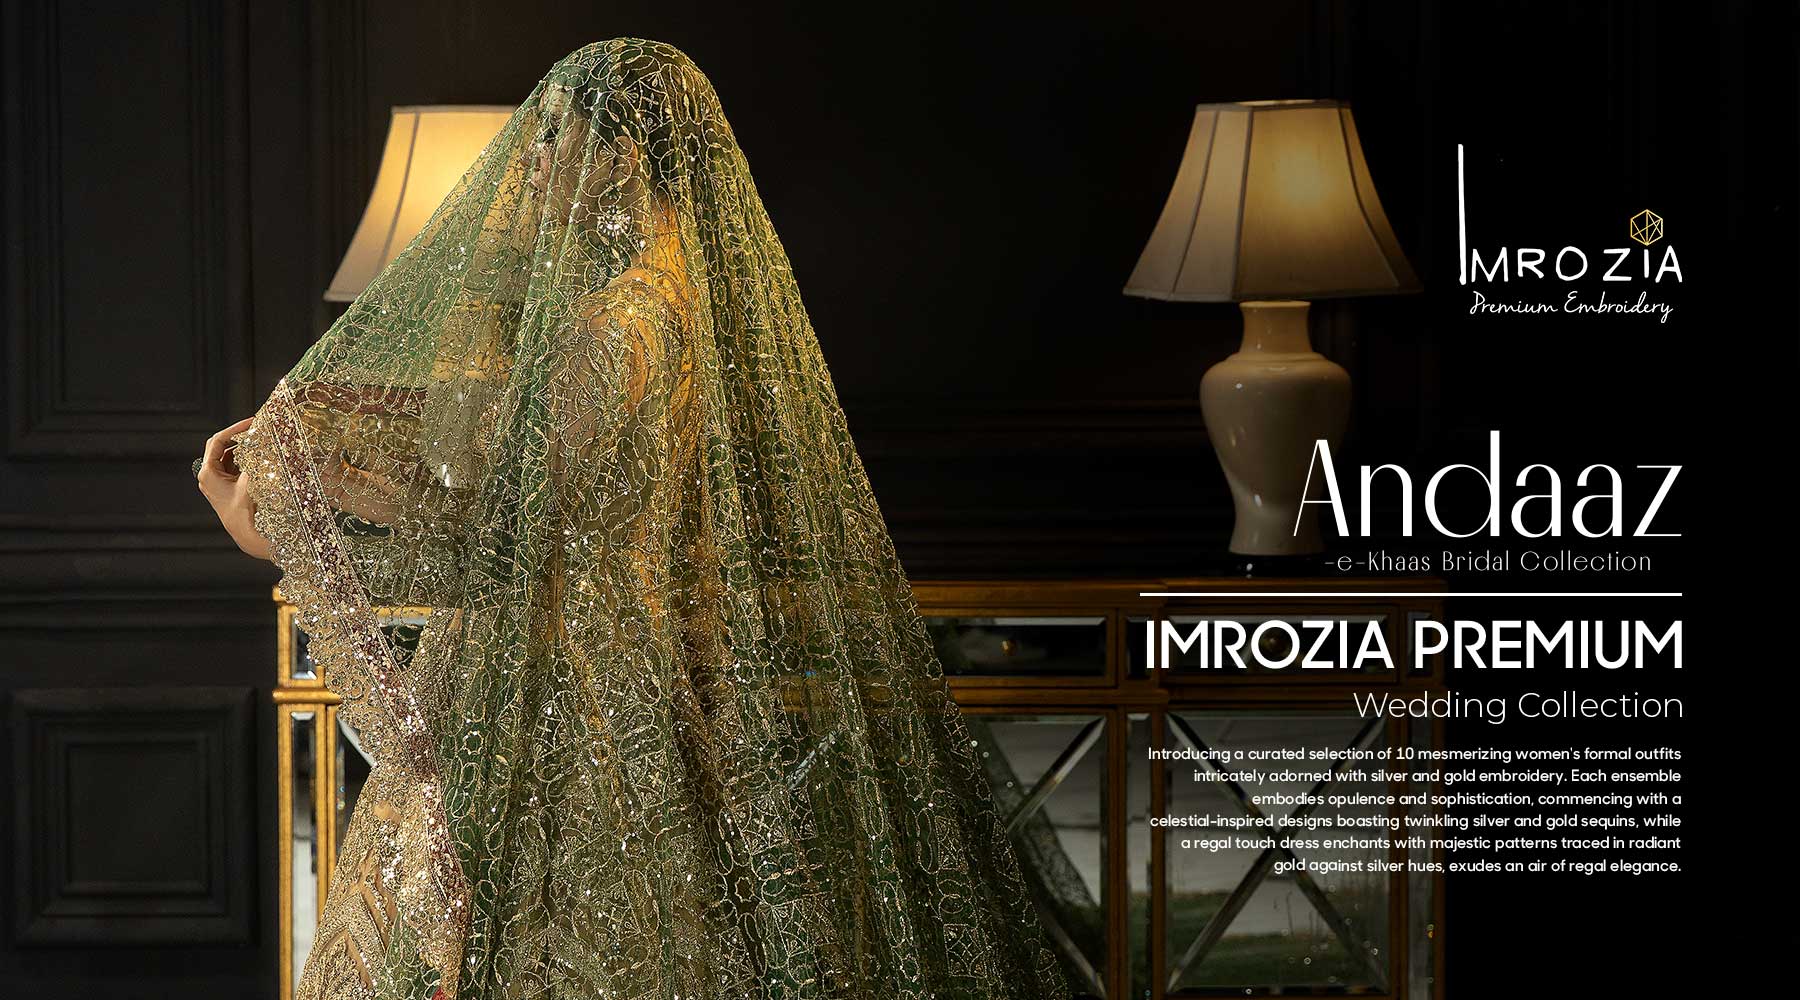 Imrozia Premium Wedding Collection: Where Tradition Meets Modernity